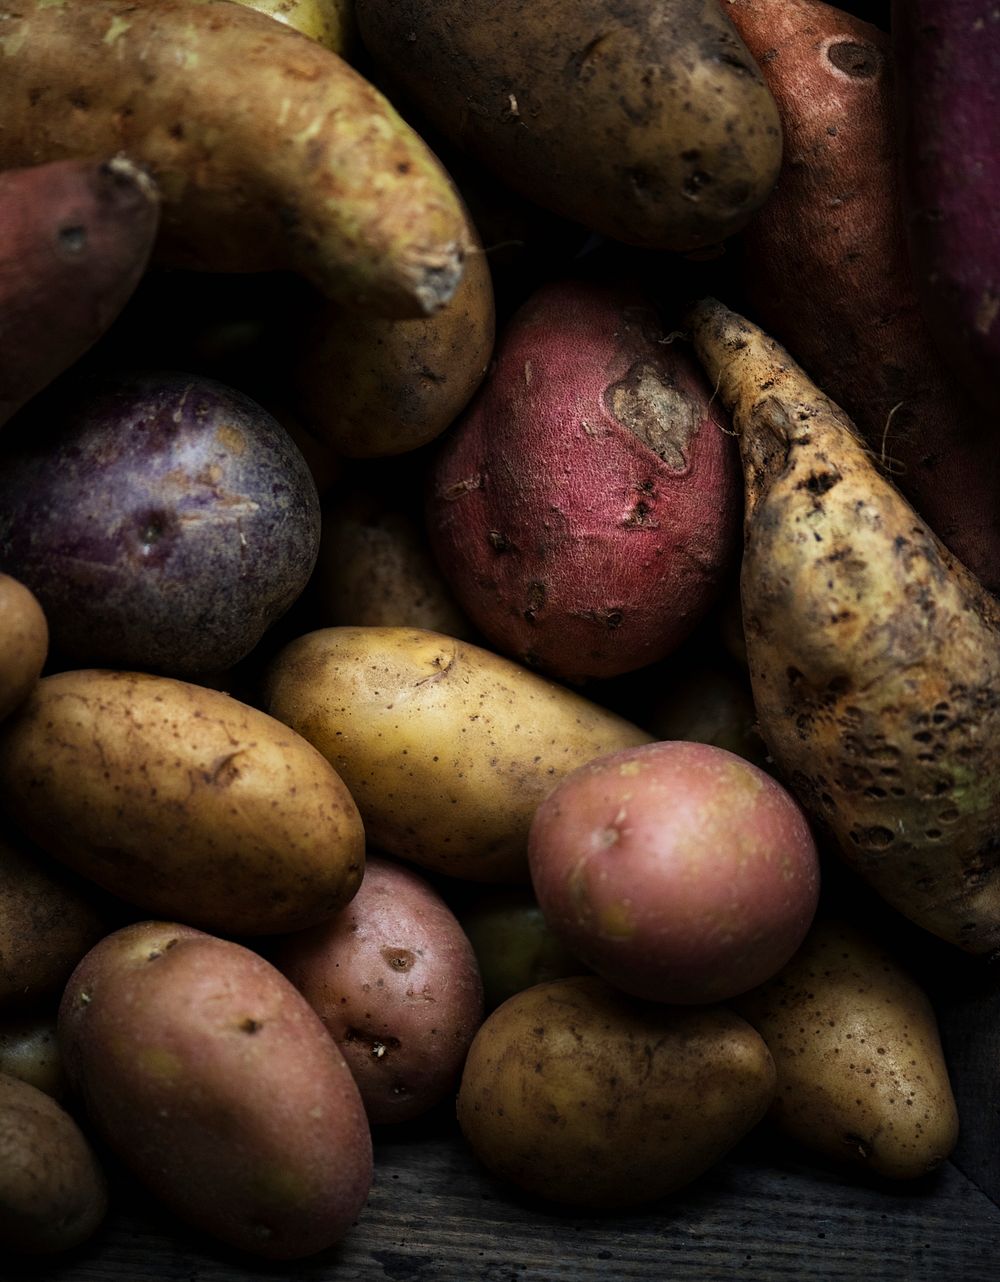 Closeup of fresh organic potatoes